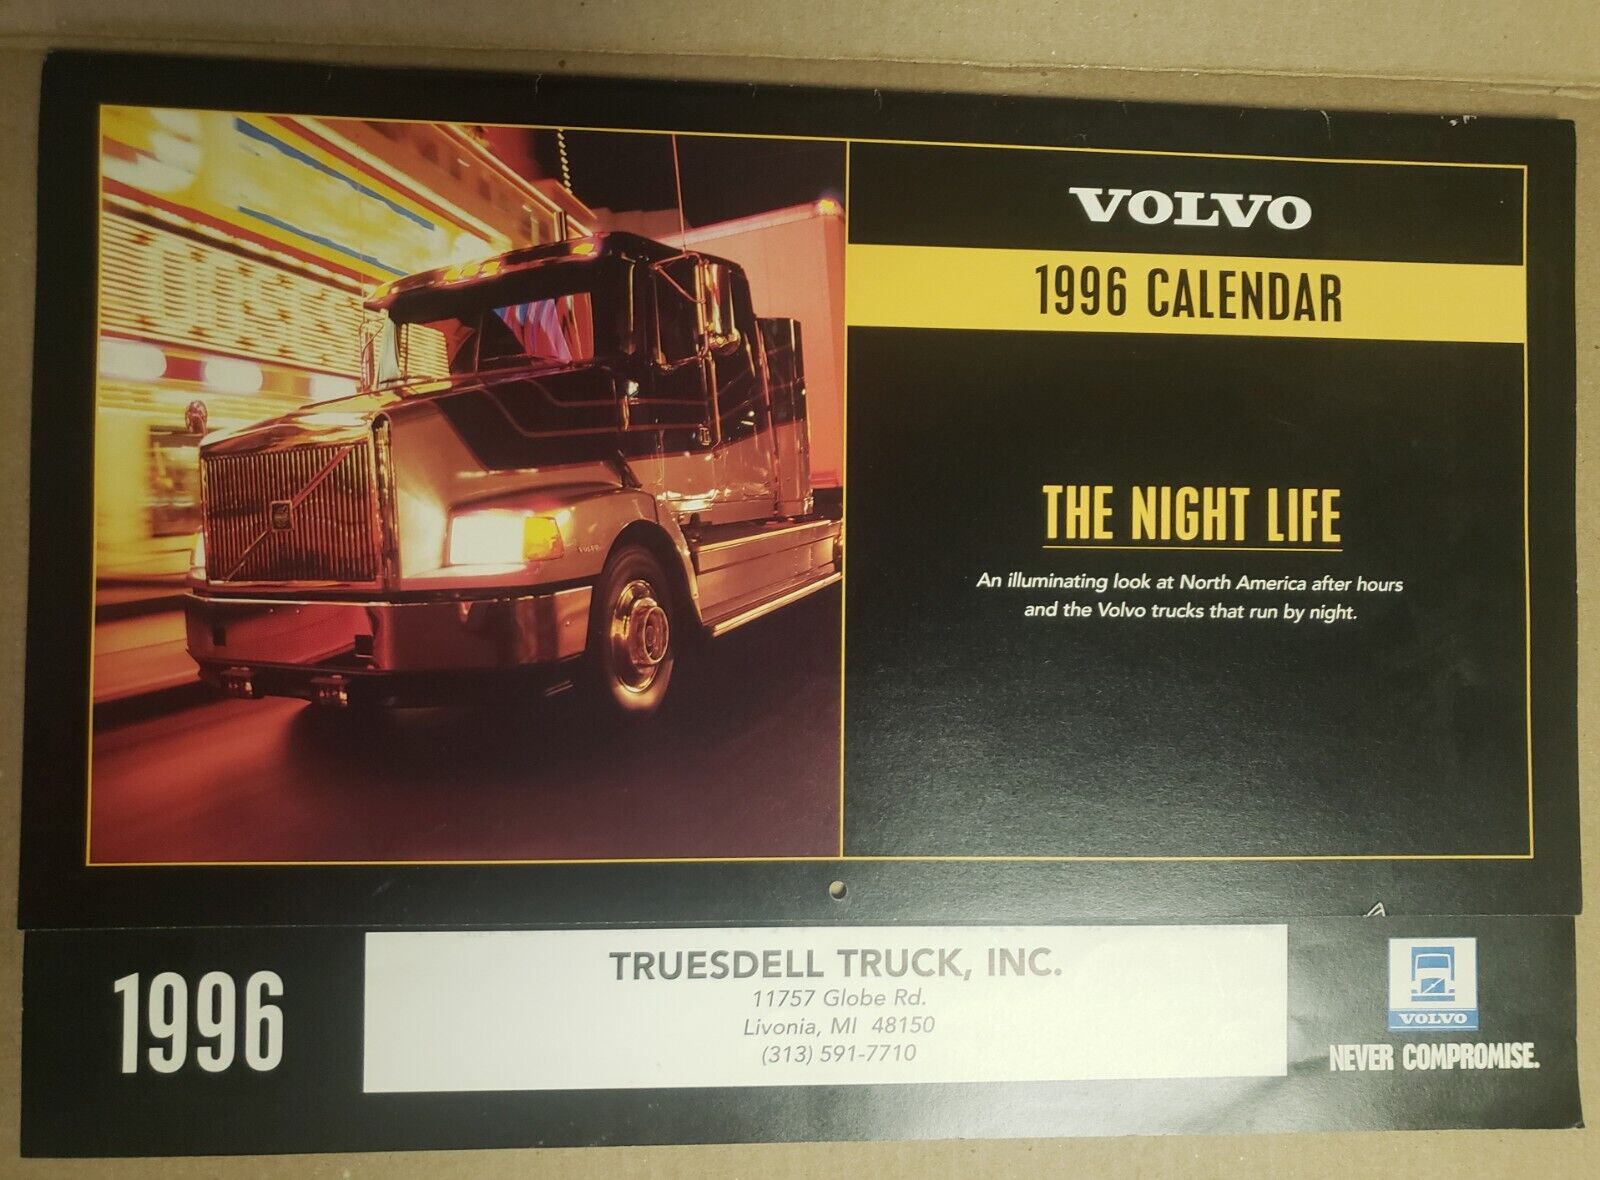 1996 Volvo Calendar (The Night Life) from Truesdell Truck, Inc